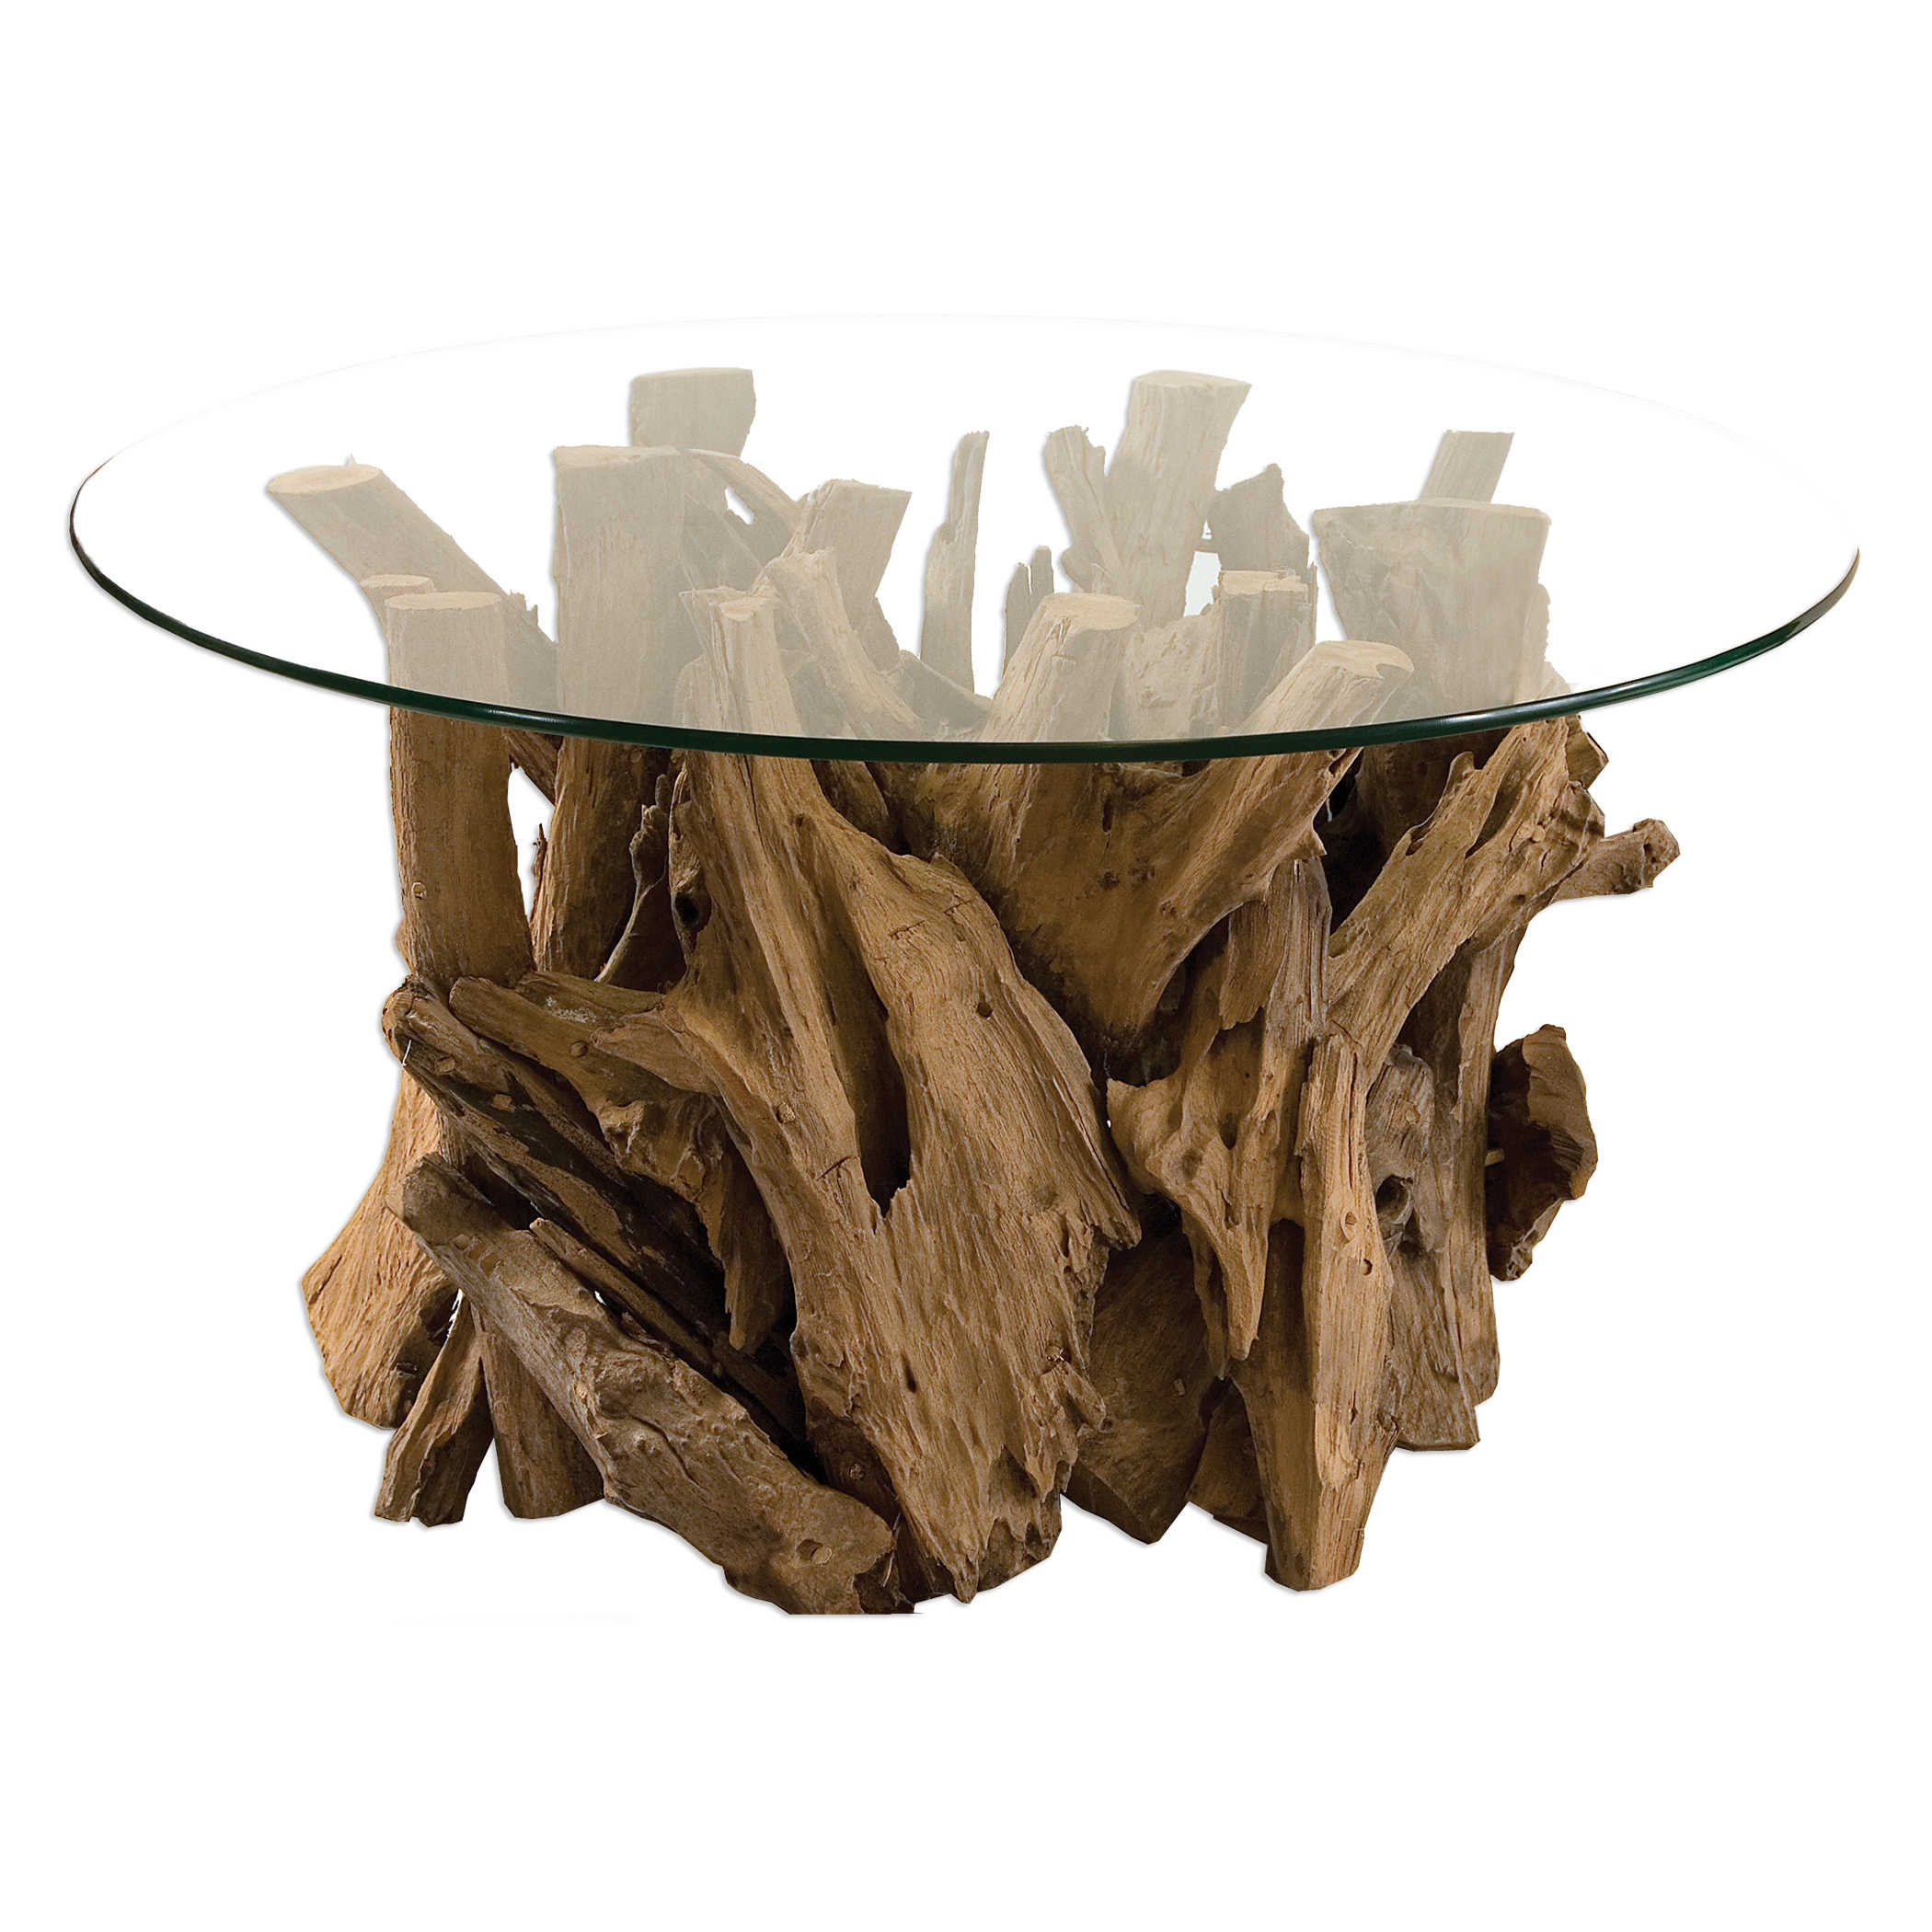 Teak Driftwood Cocktail Table – $1,230.00